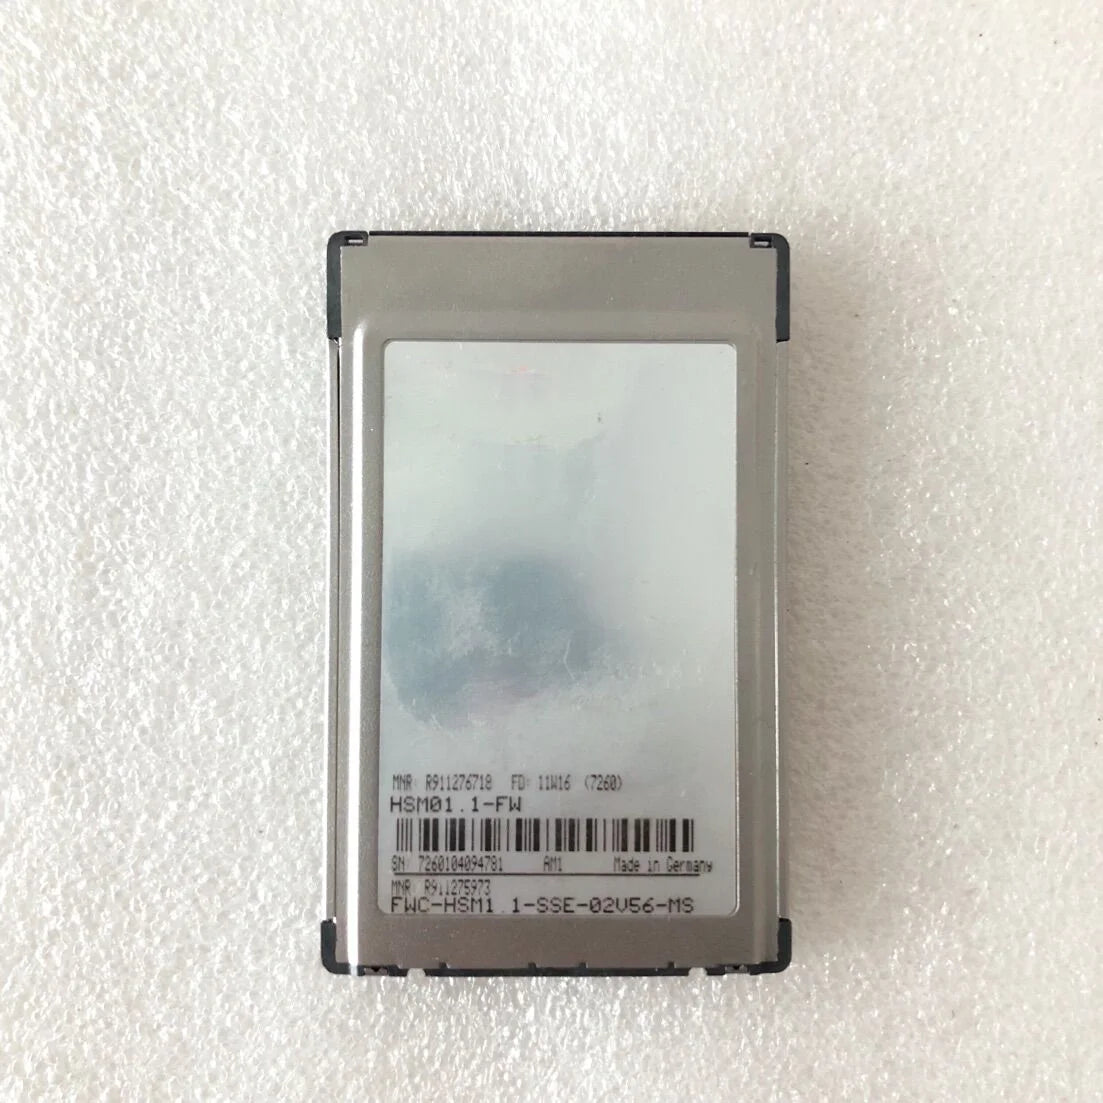 Memory Card DIAX 04 HSM01.1-FW